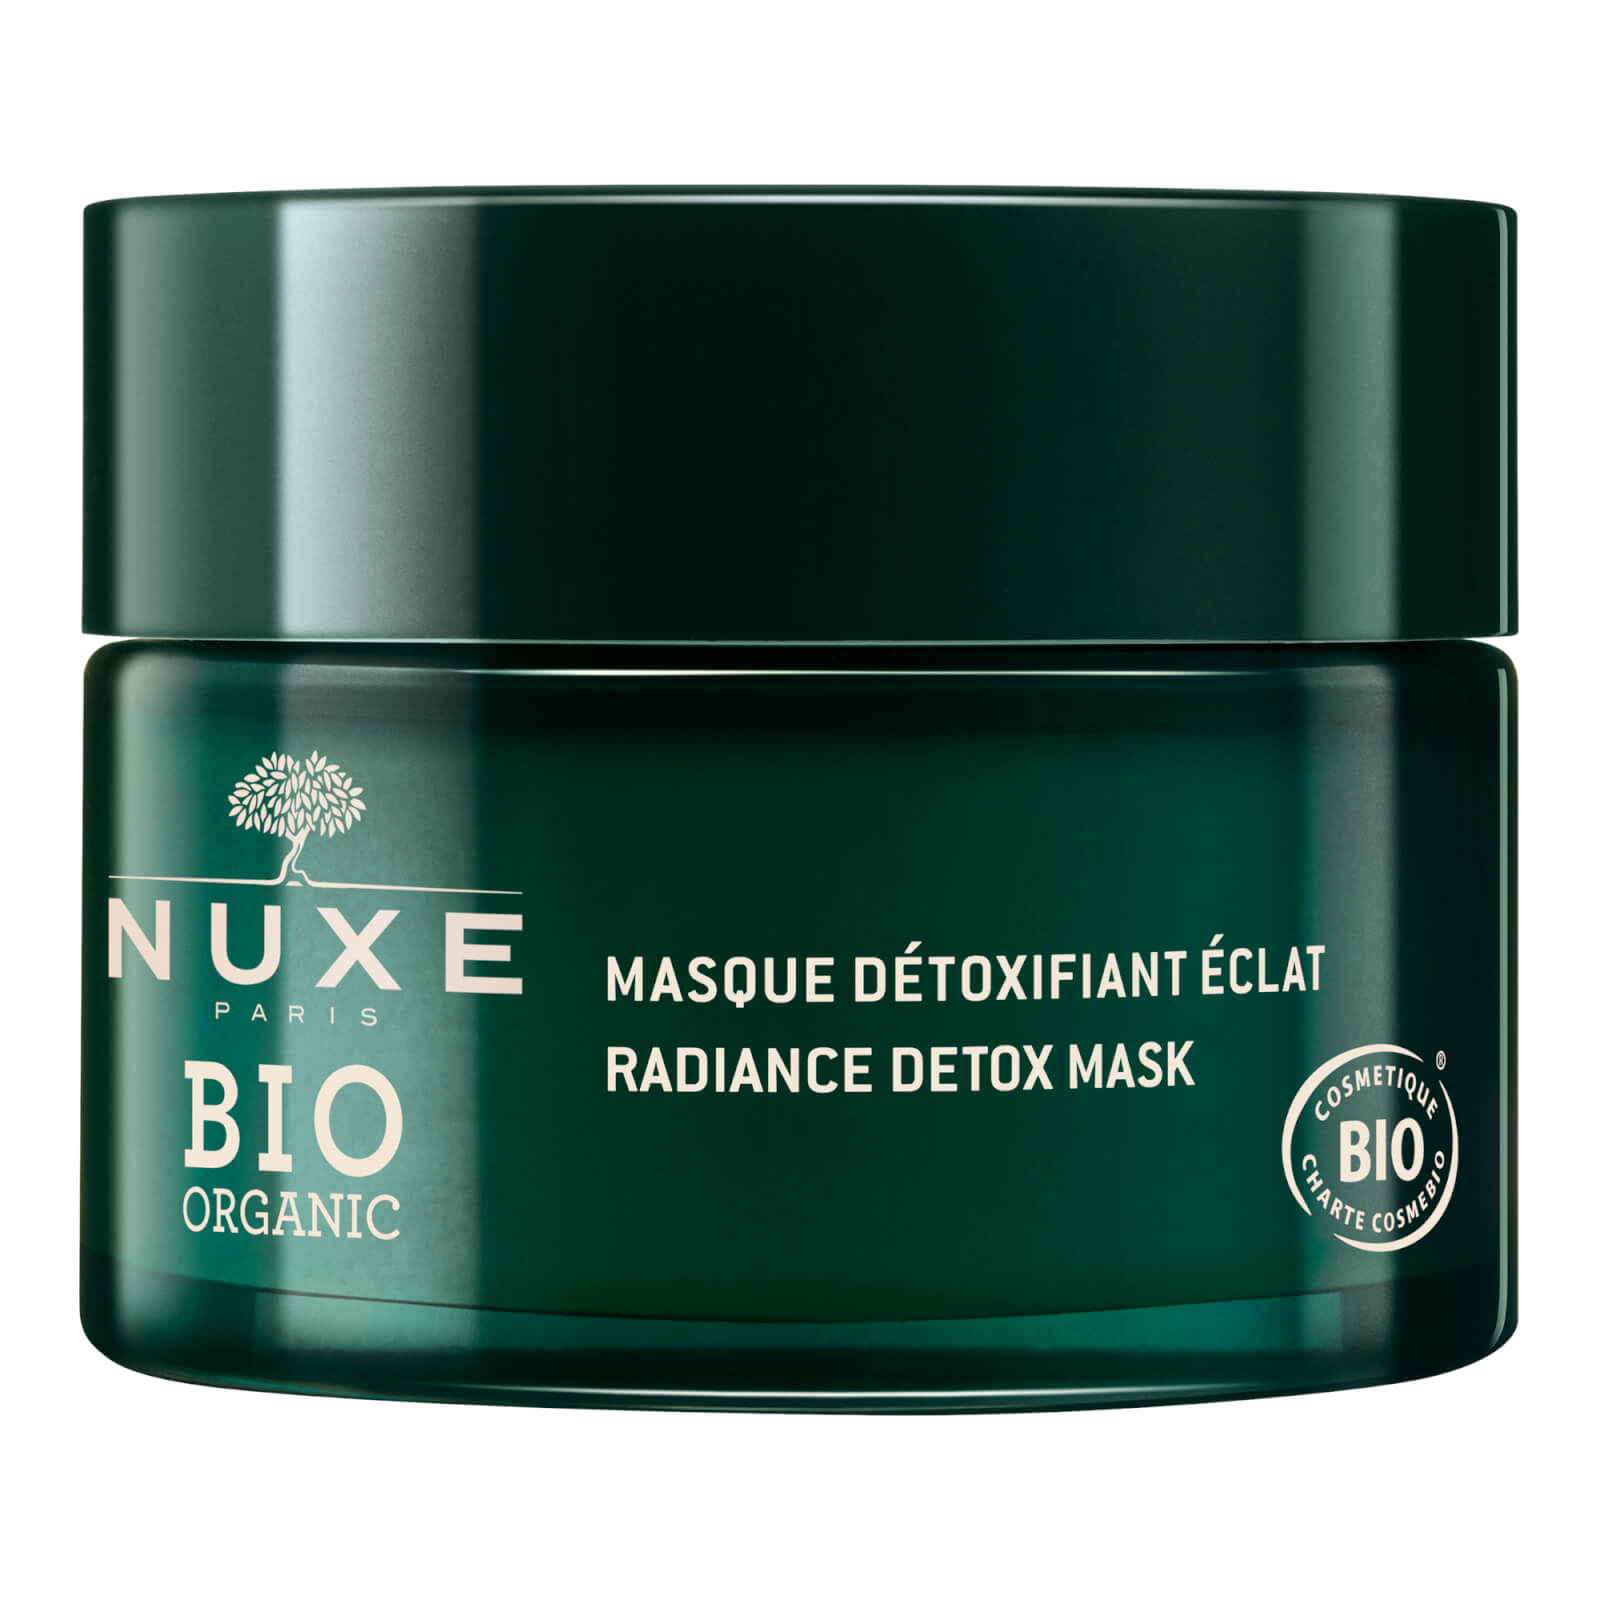 Nuxe Radiance Detox Mask 50ml, Nuxe Bio